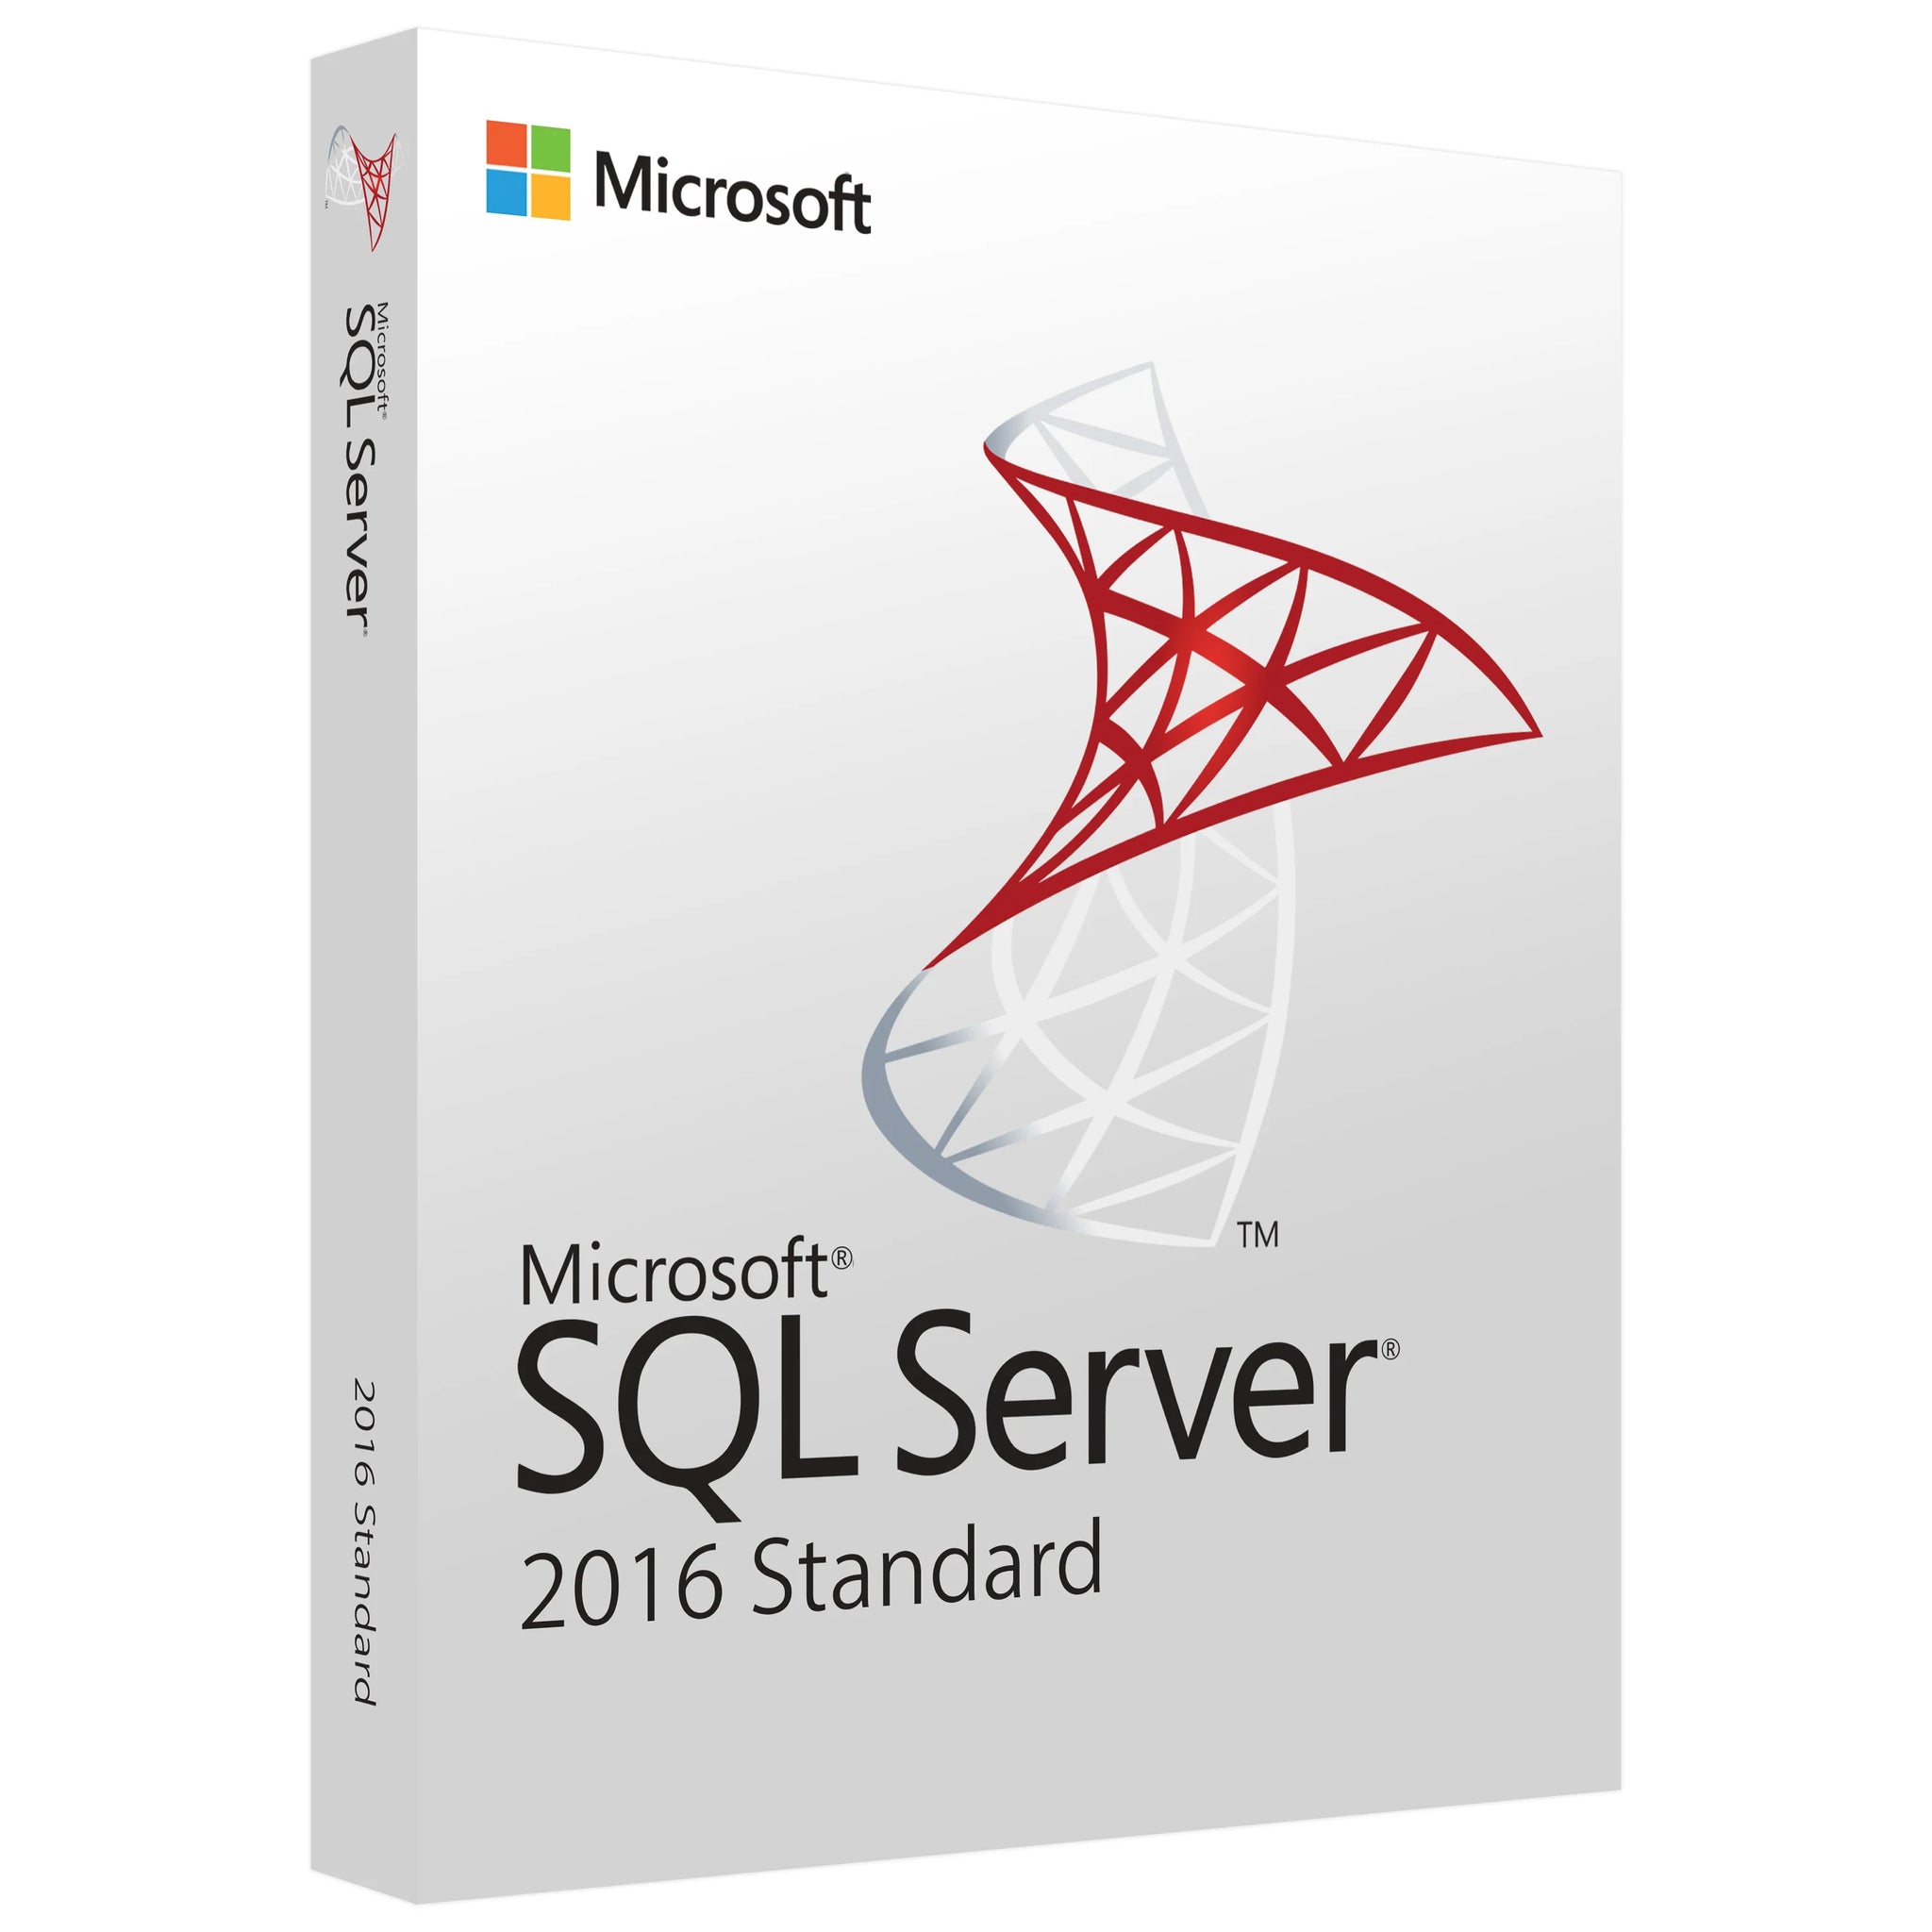 Microsoft SQL Server 2016 Standard- Lifetime License Key